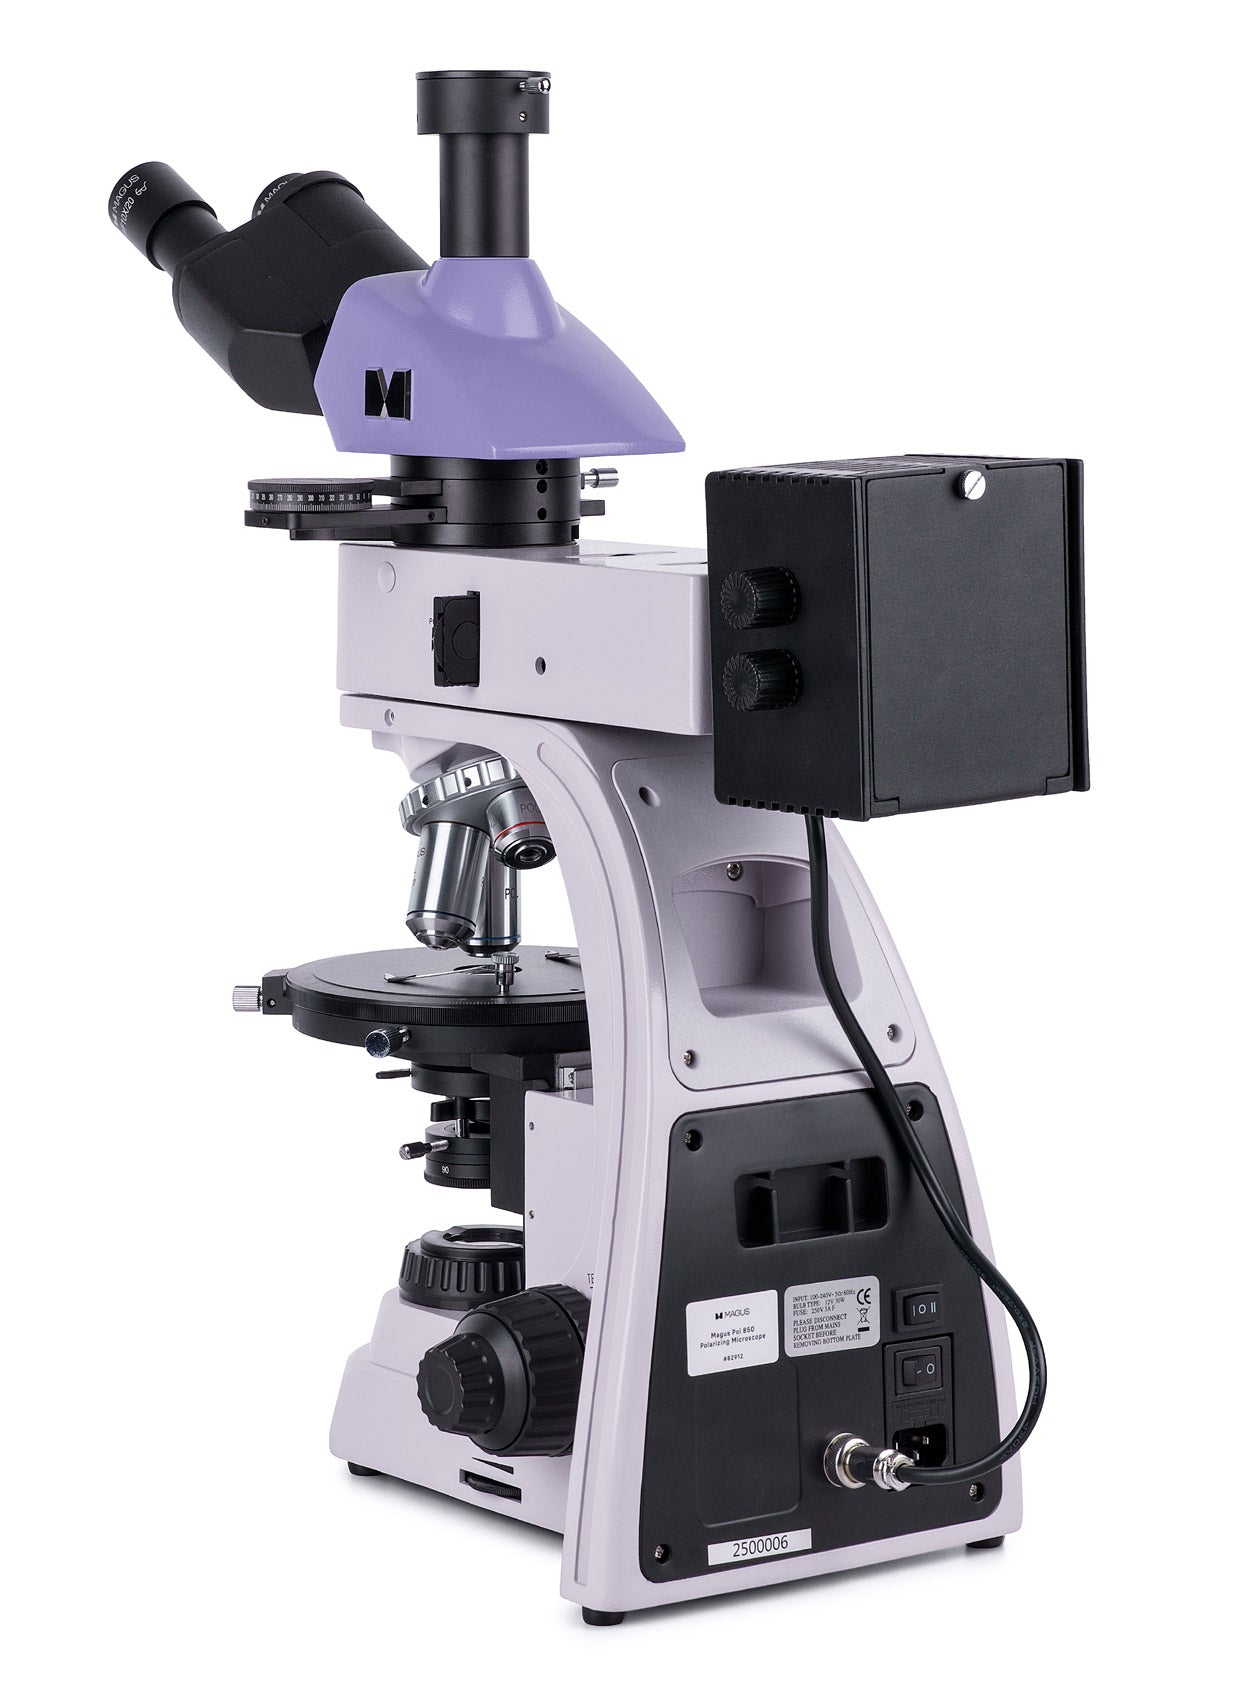 MAGUS Pol 850 Polariserende Microscoop